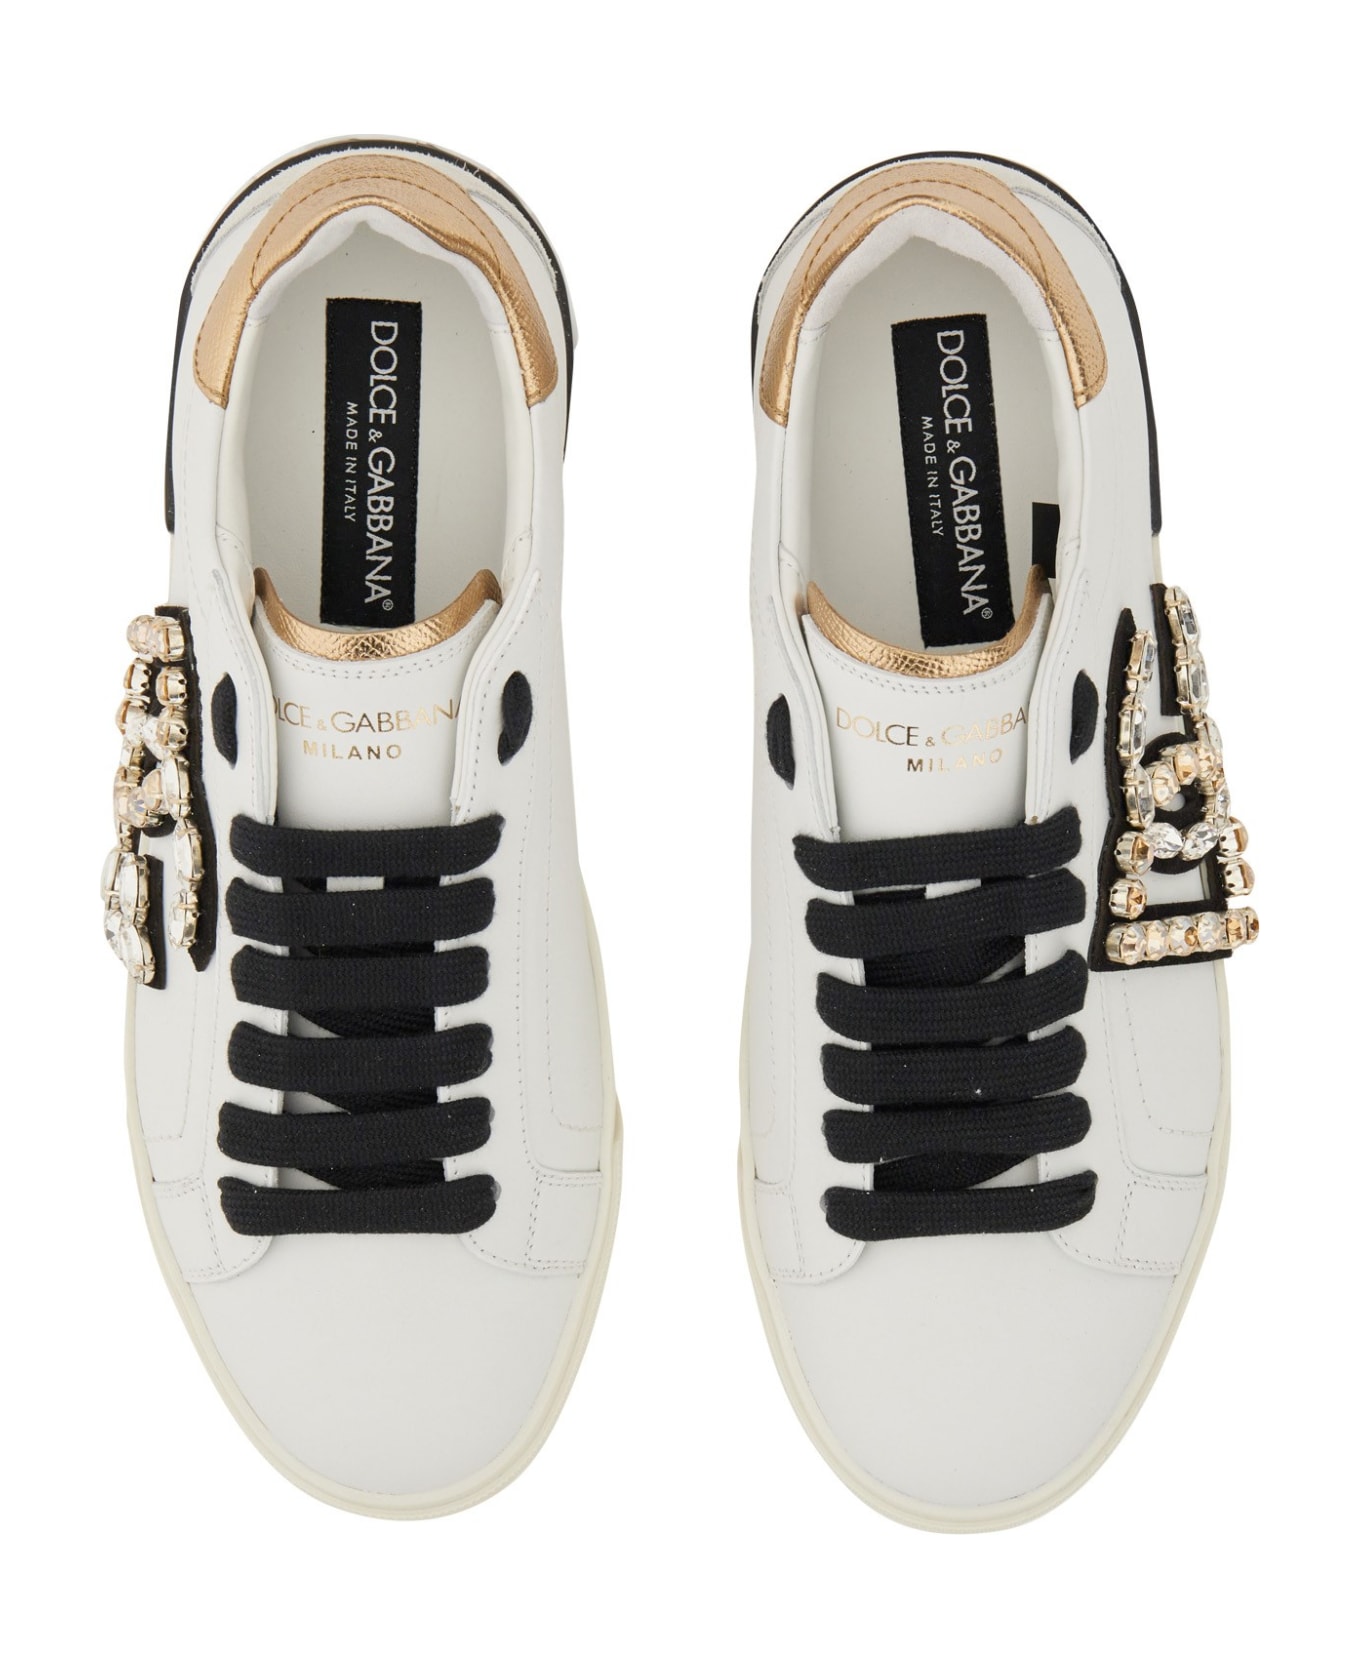 Dolce & Gabbana Portofino Vintage Sneakers - White / Gold